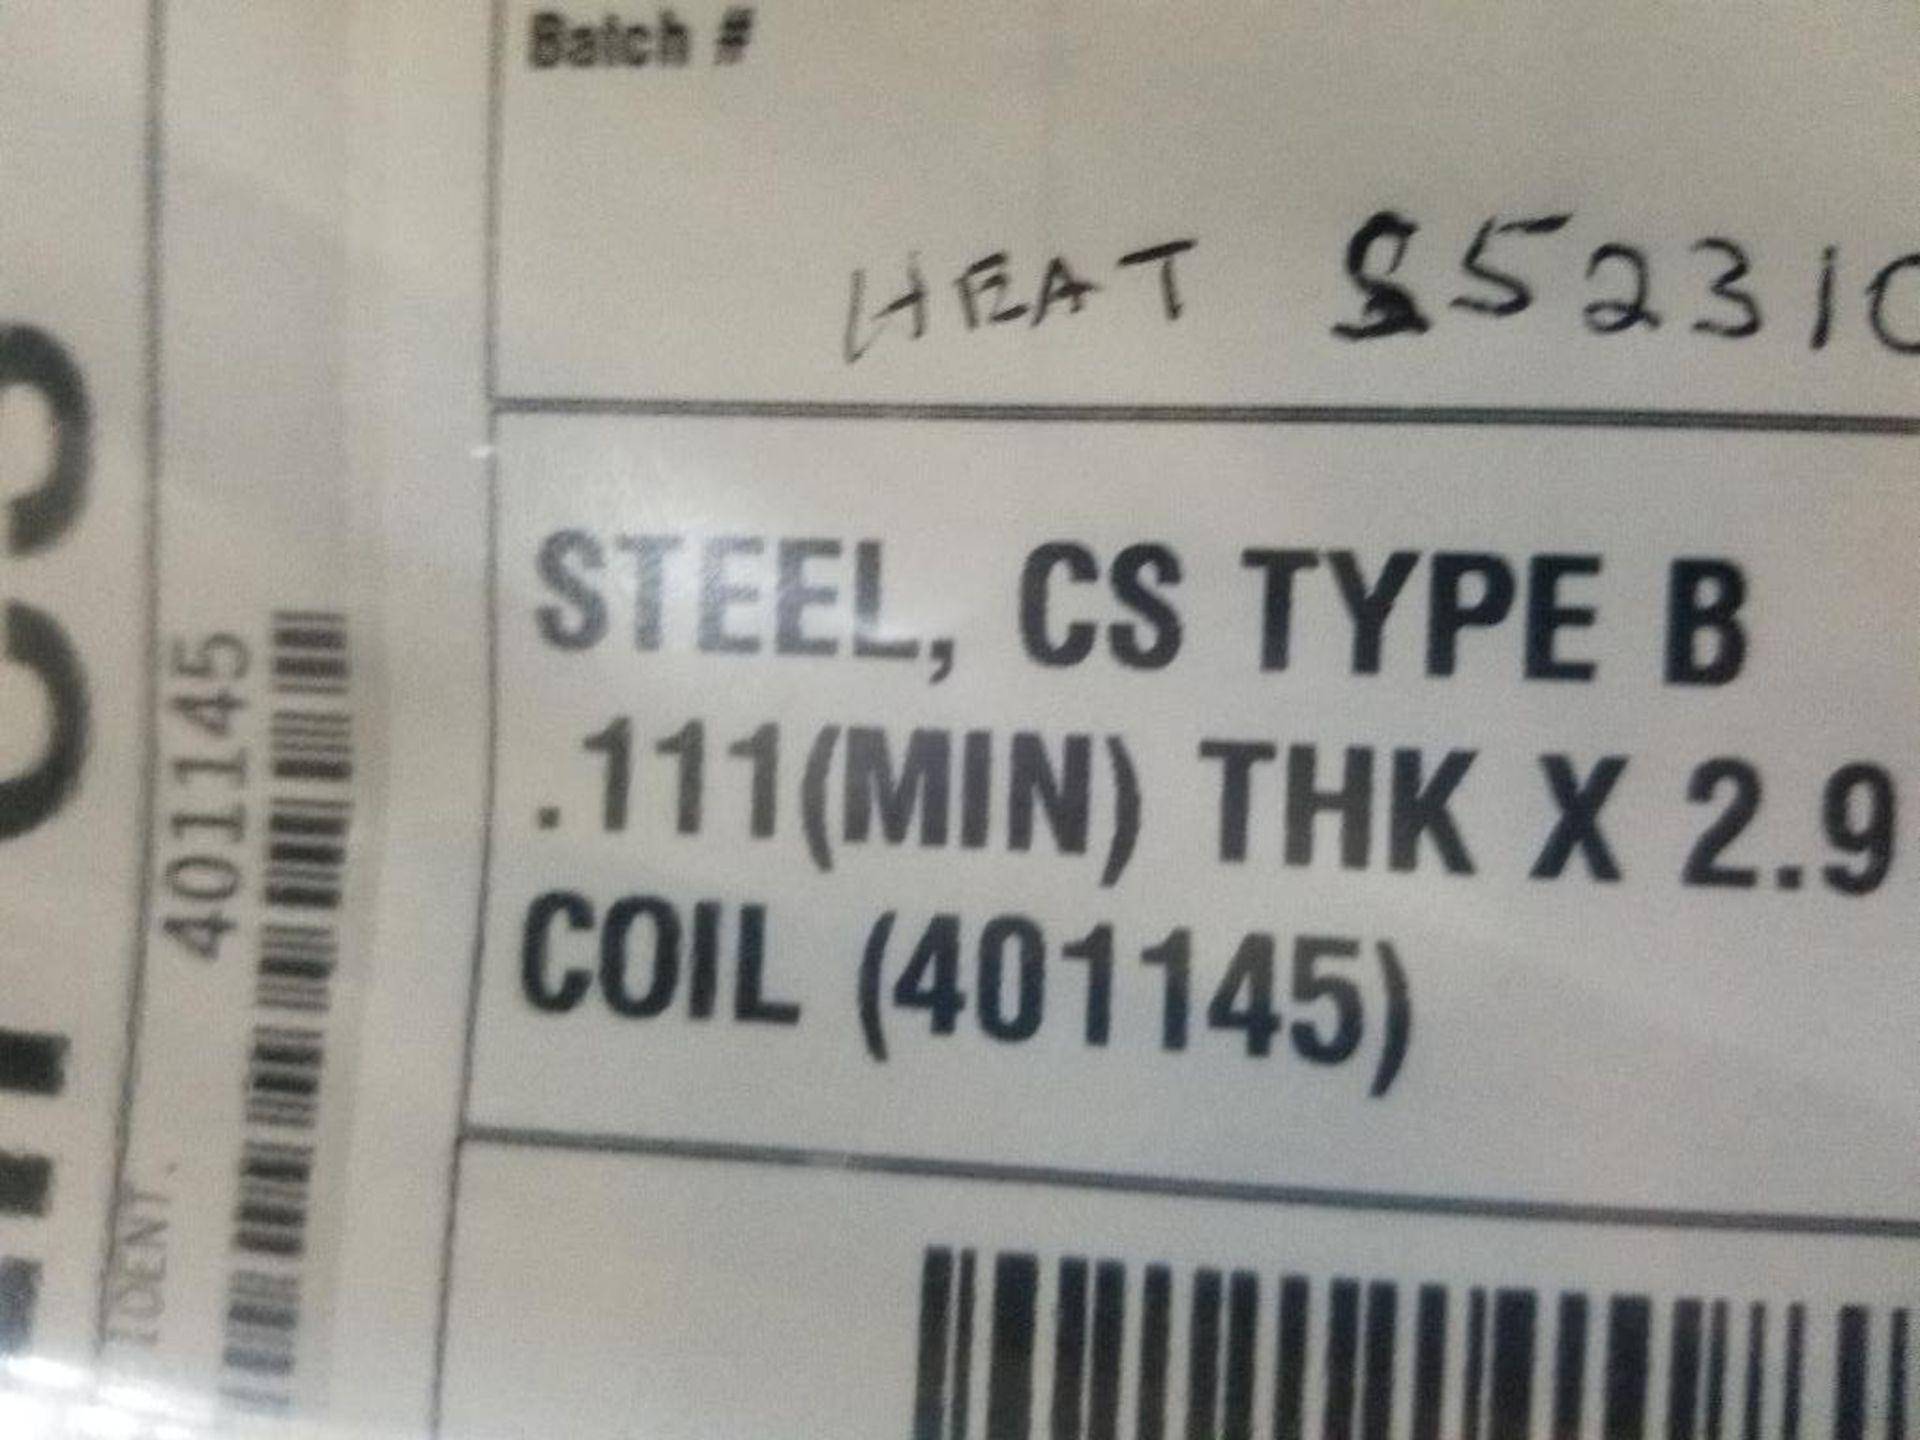 Target Steel, INC. 401145. 0.1110" x 2.9000" CS-Type B steel coil. Approx. 1290 LBS. - Image 2 of 2